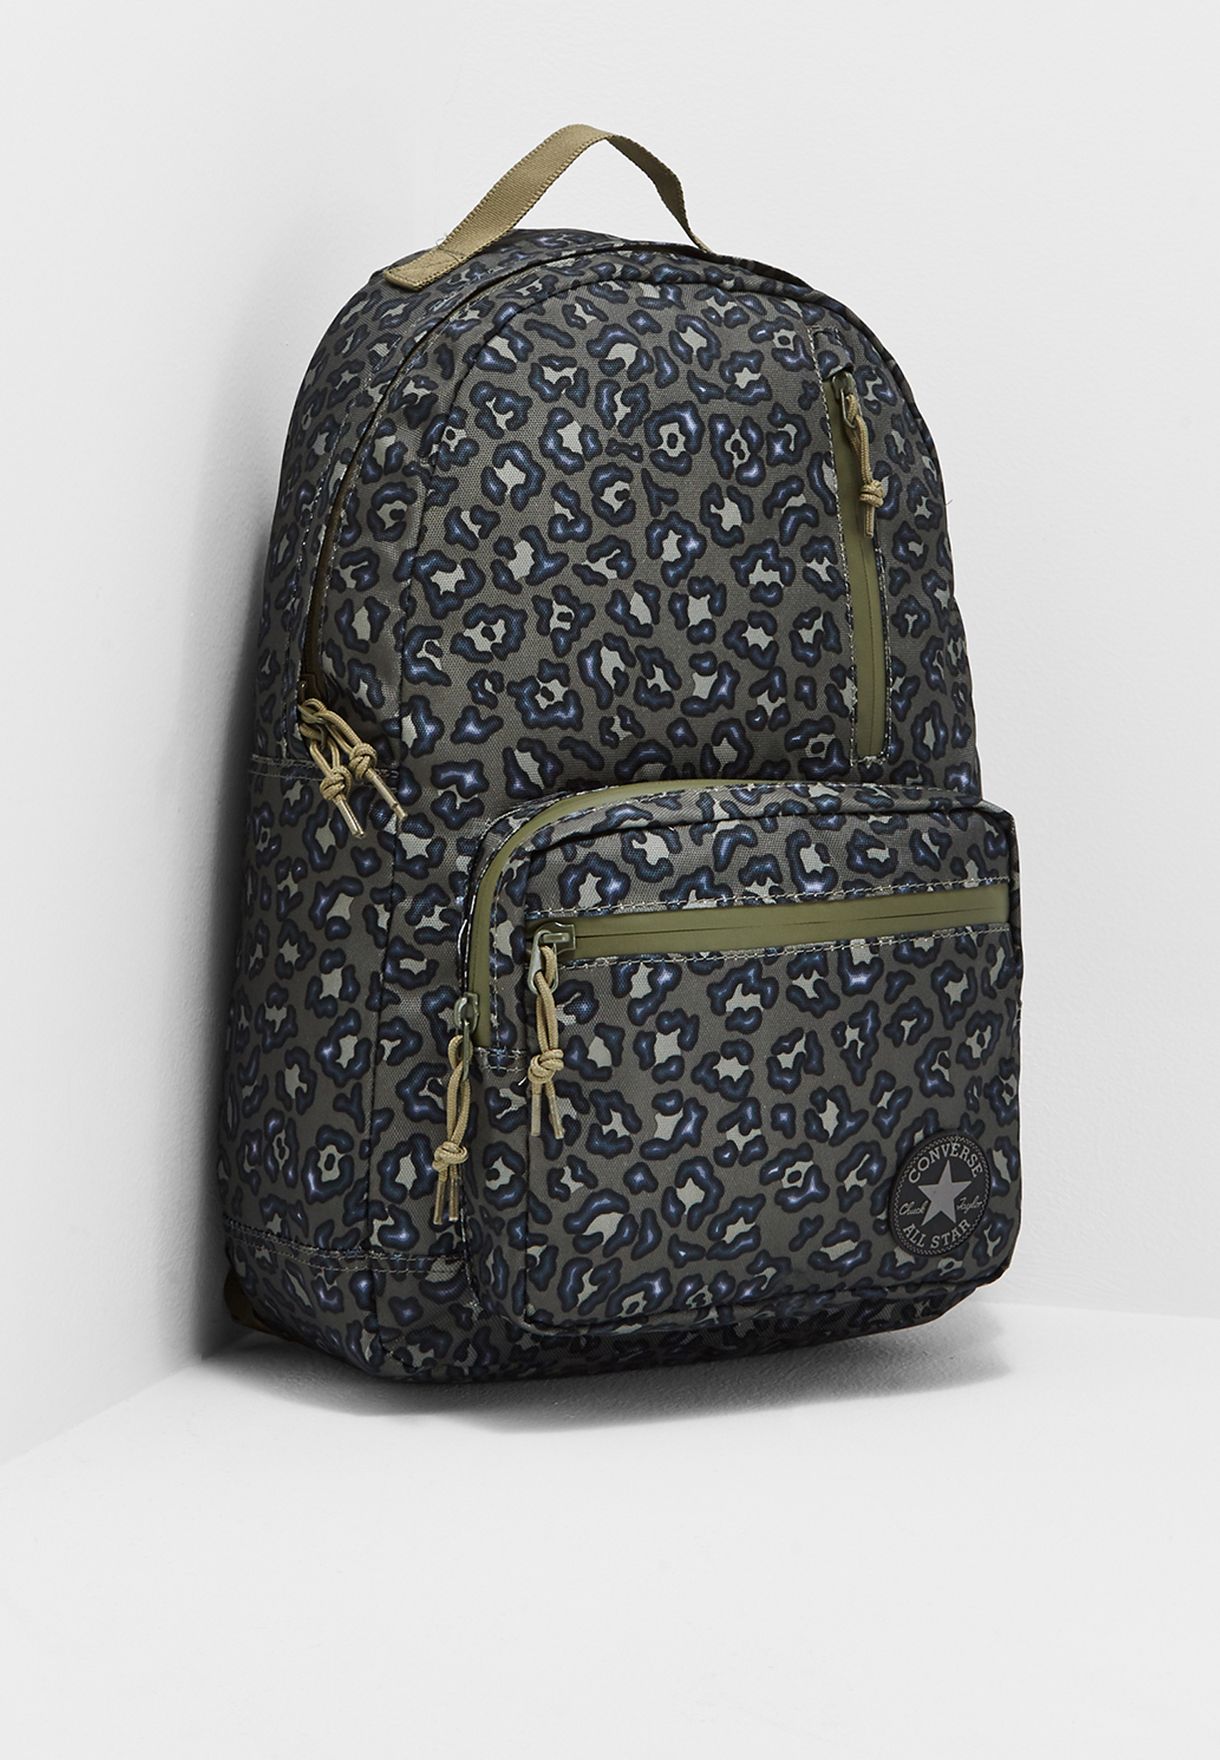 converse leopard print backpack